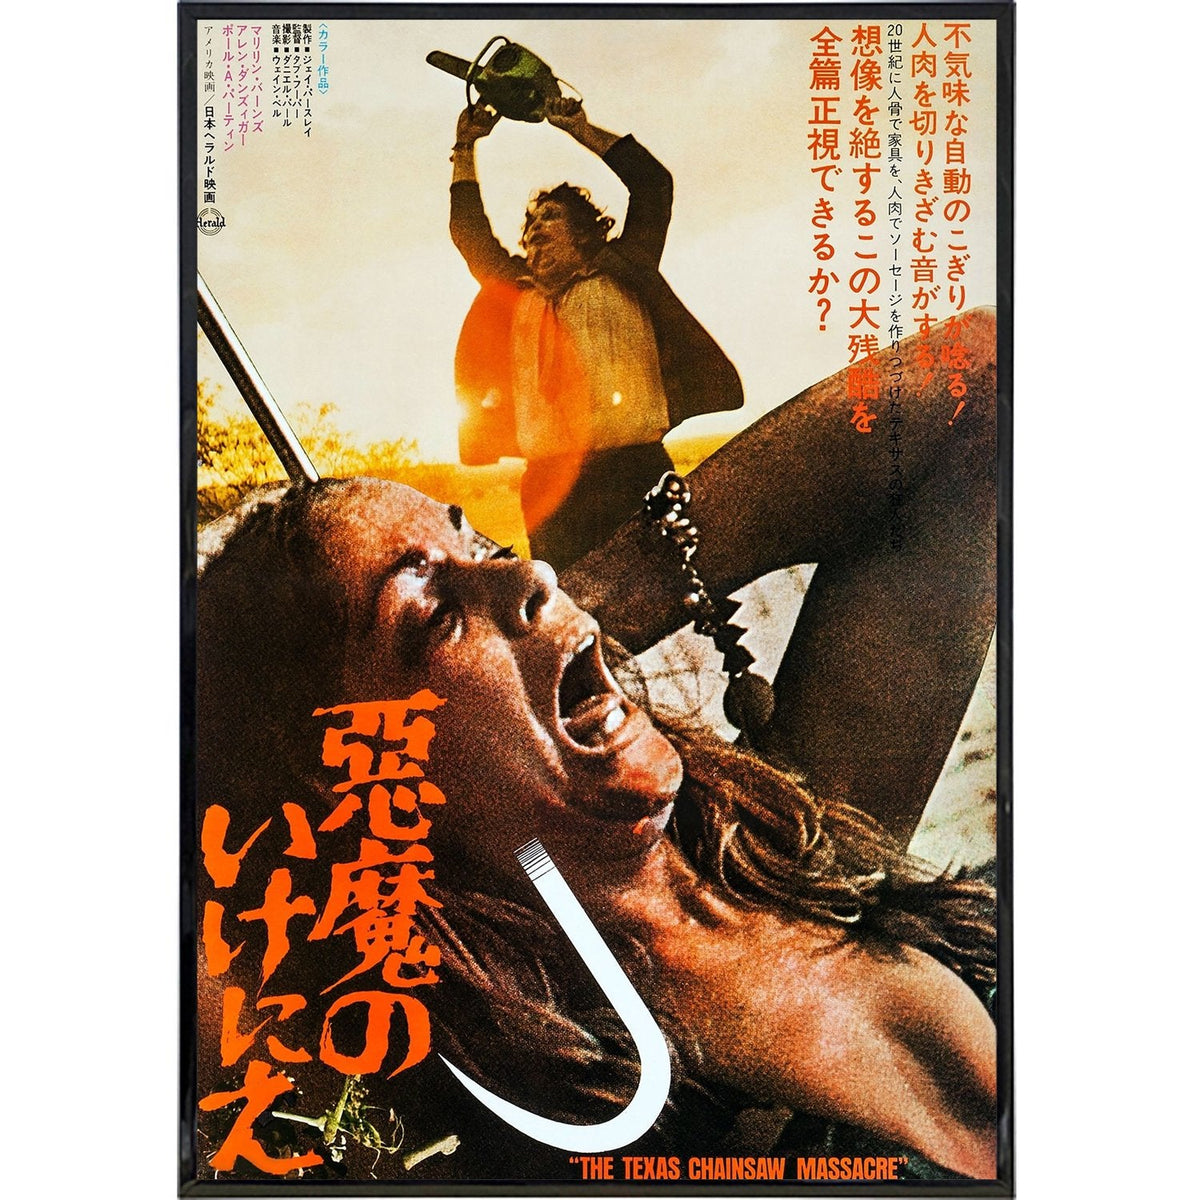 texas chainsaw massacre 1974 movie poster